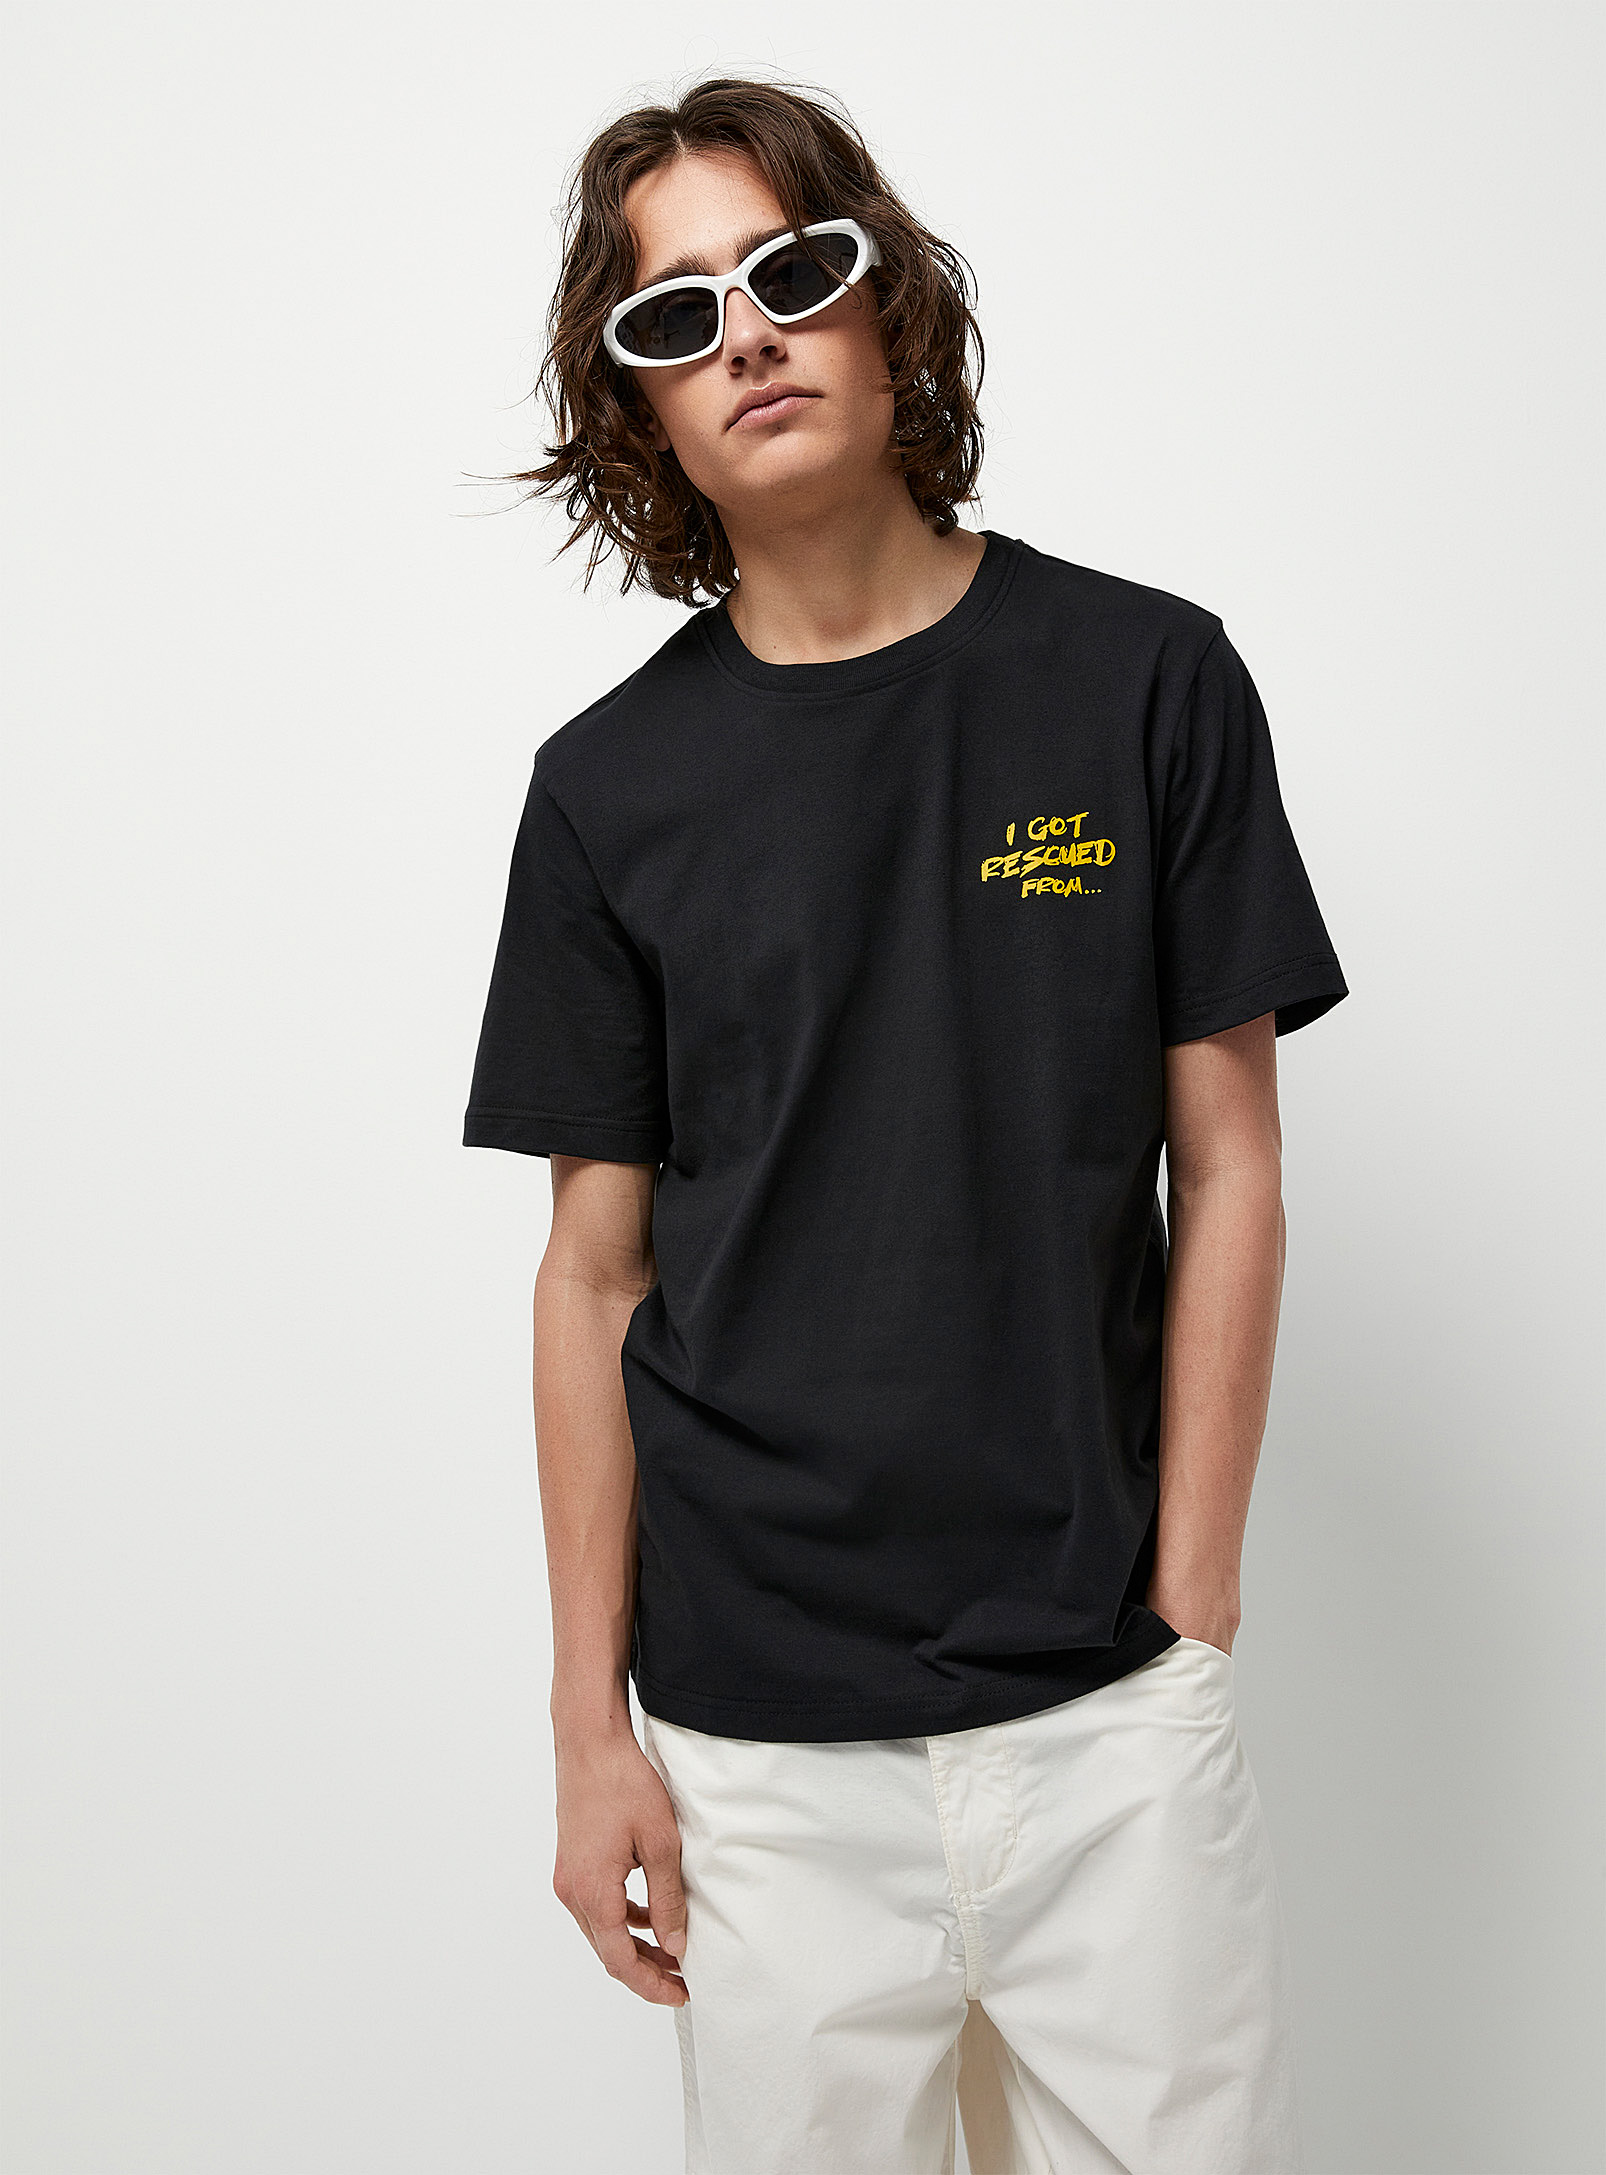 Coney Island Picnic Discoland T-shirt In Black